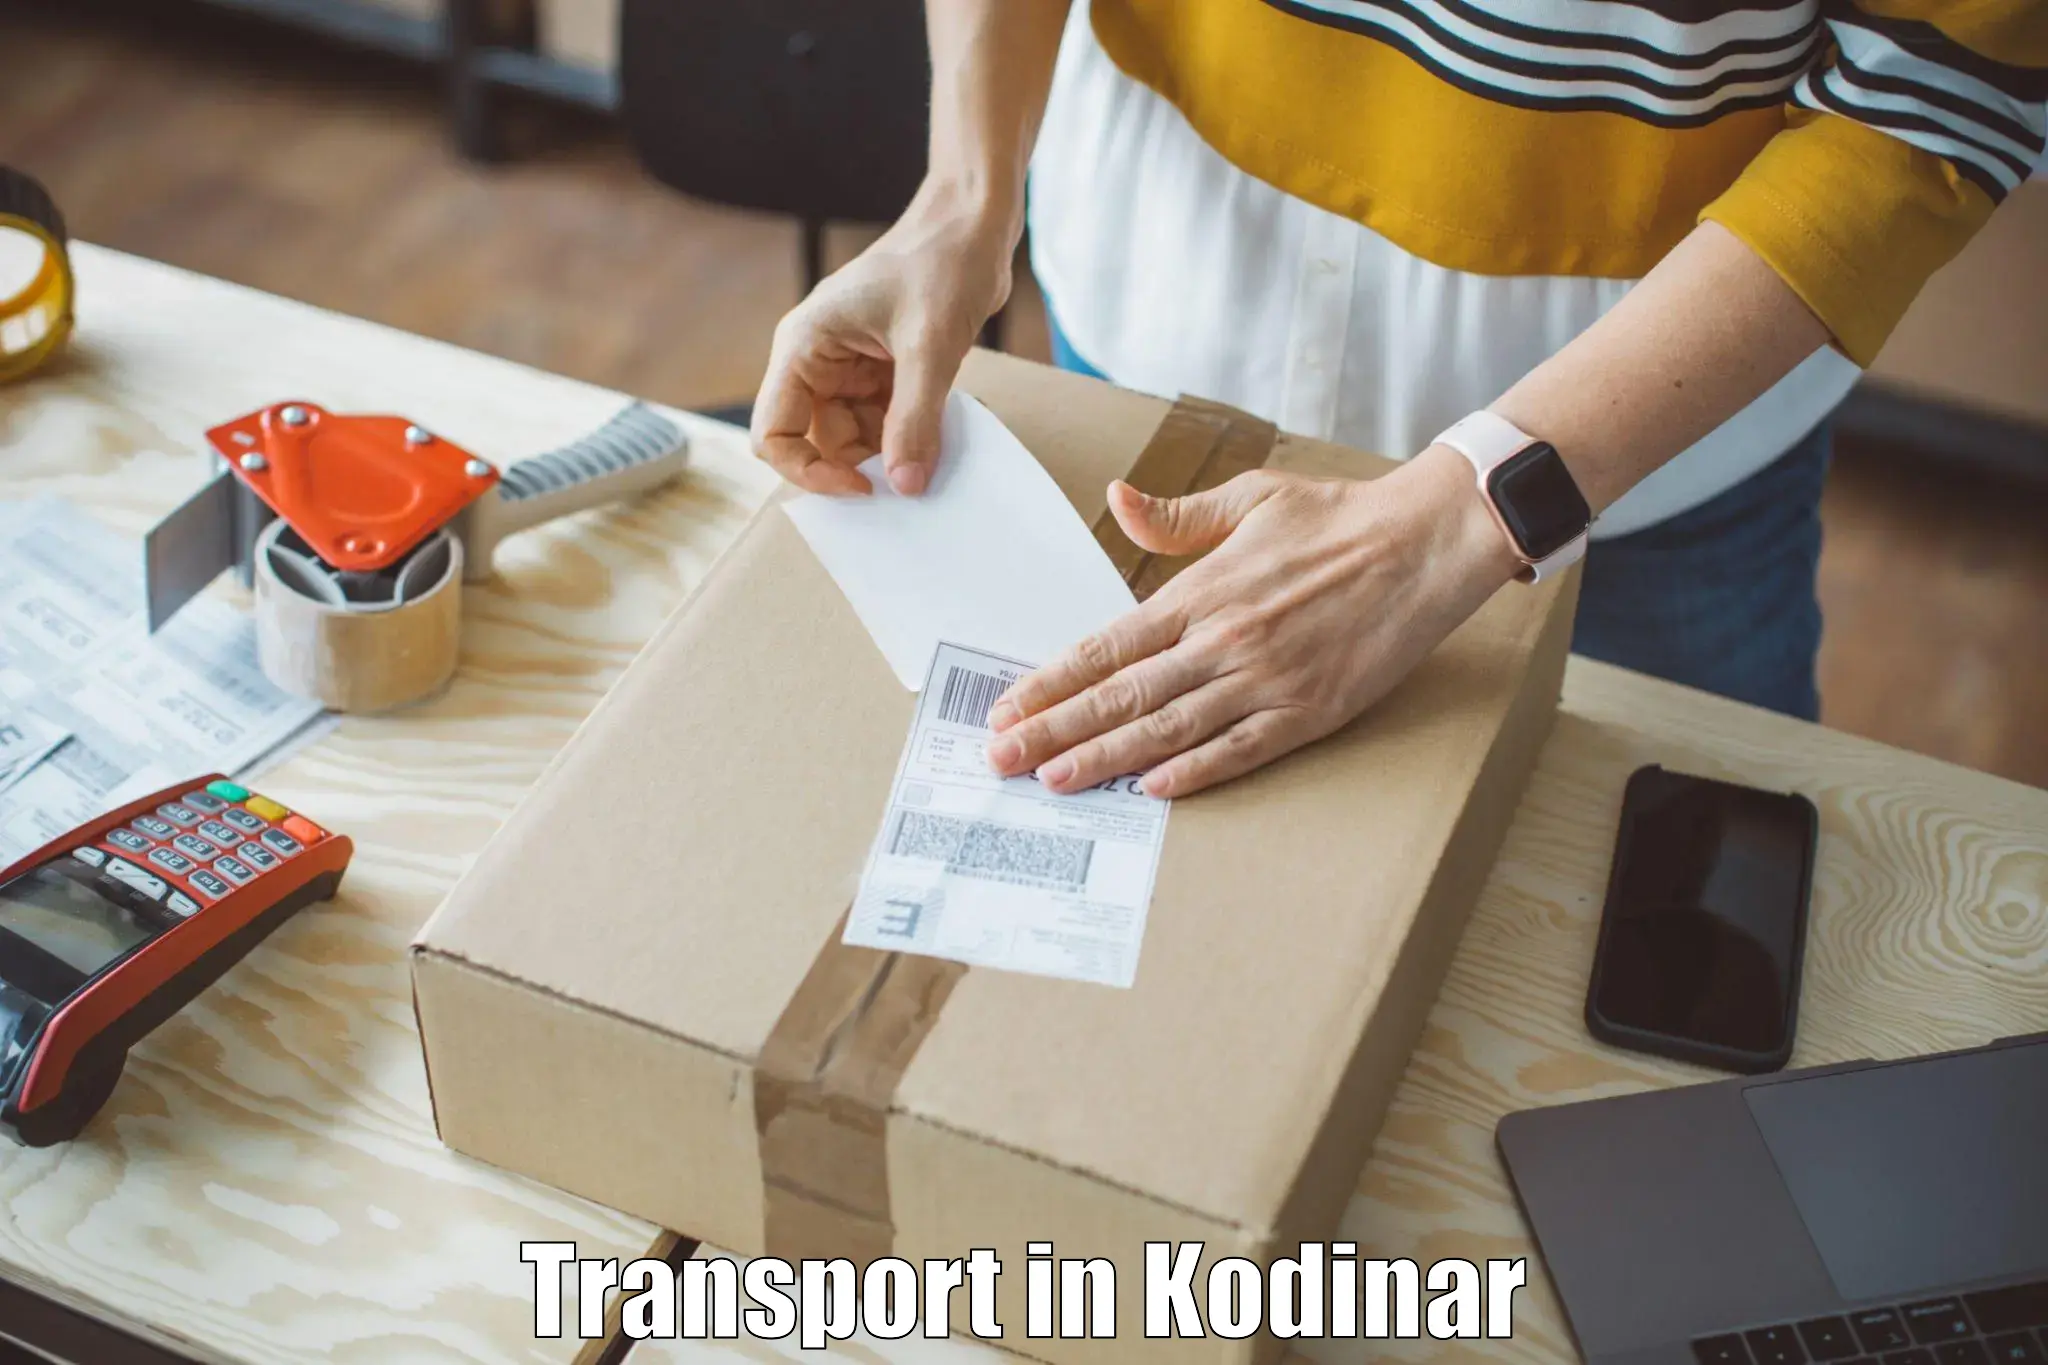 Nearby transport service in Kodinar